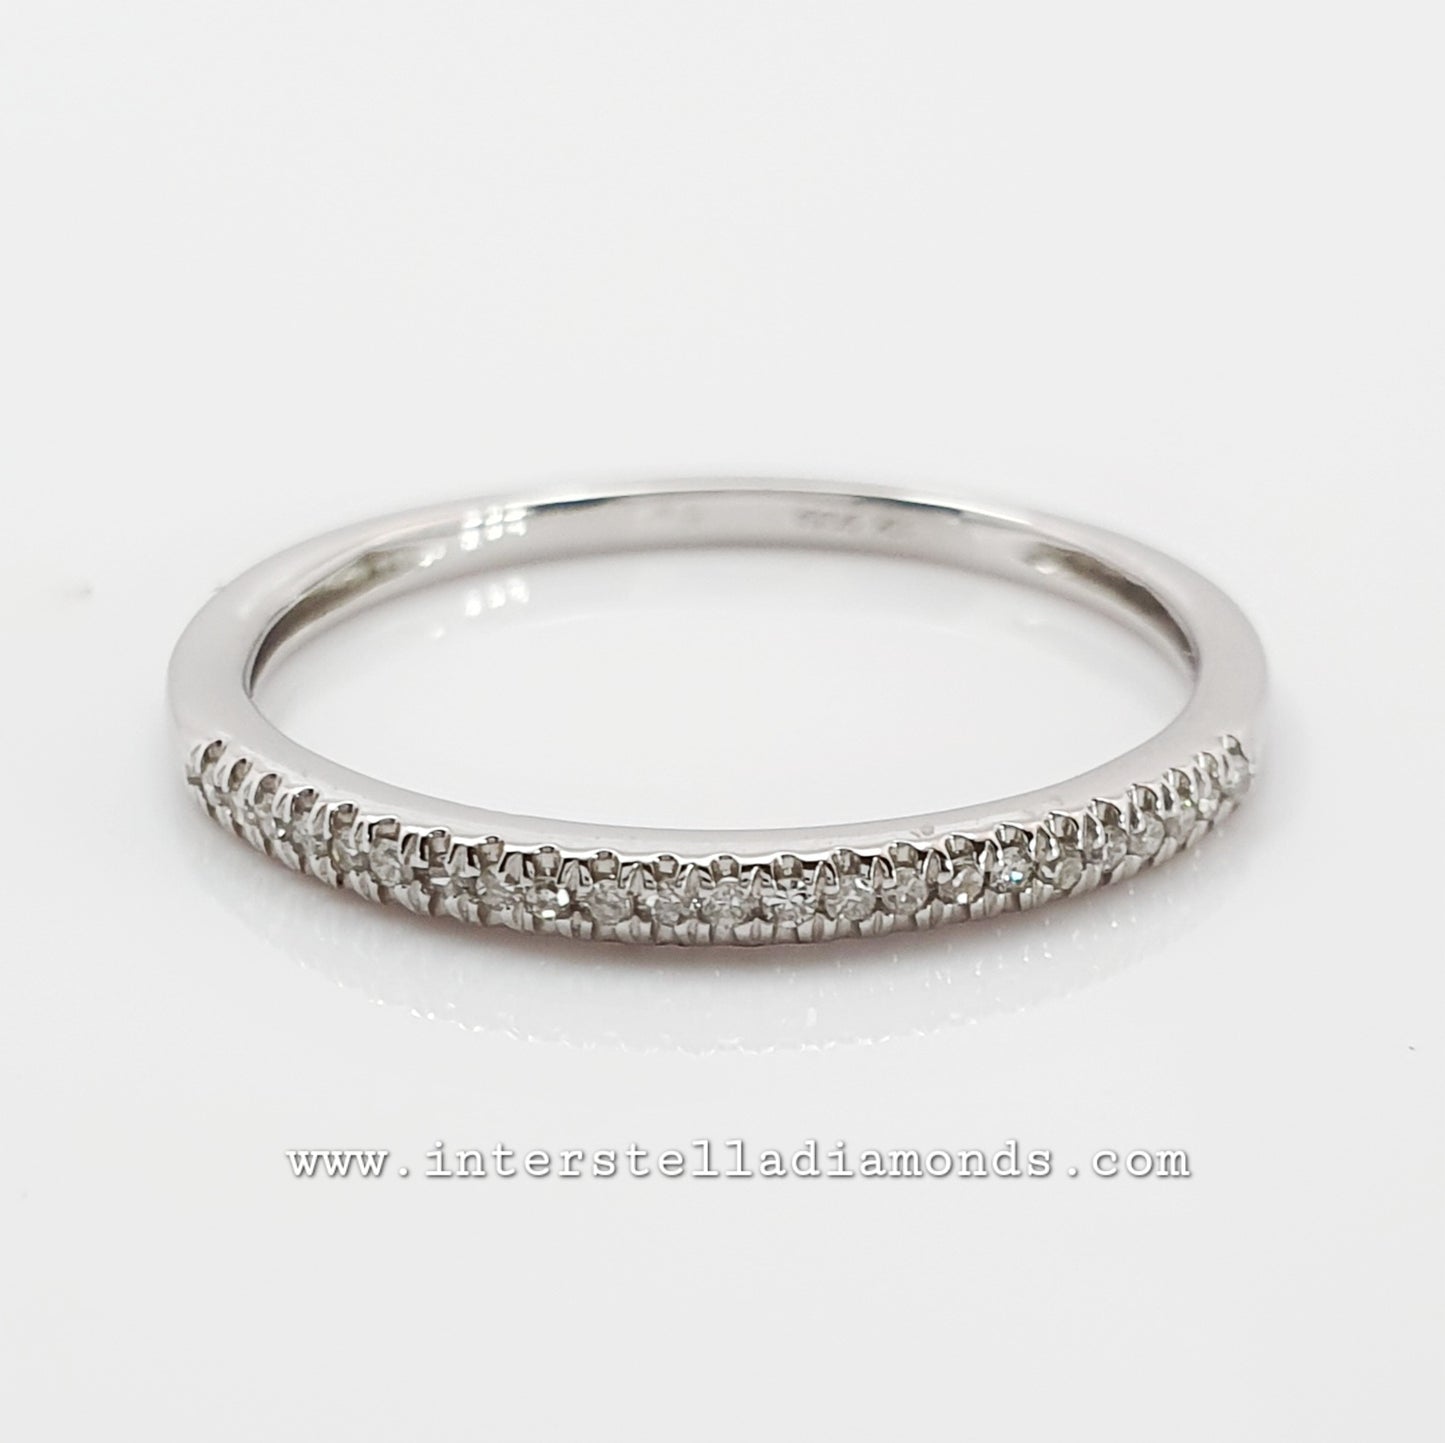 Fine white gold wedding ring or stacker ring